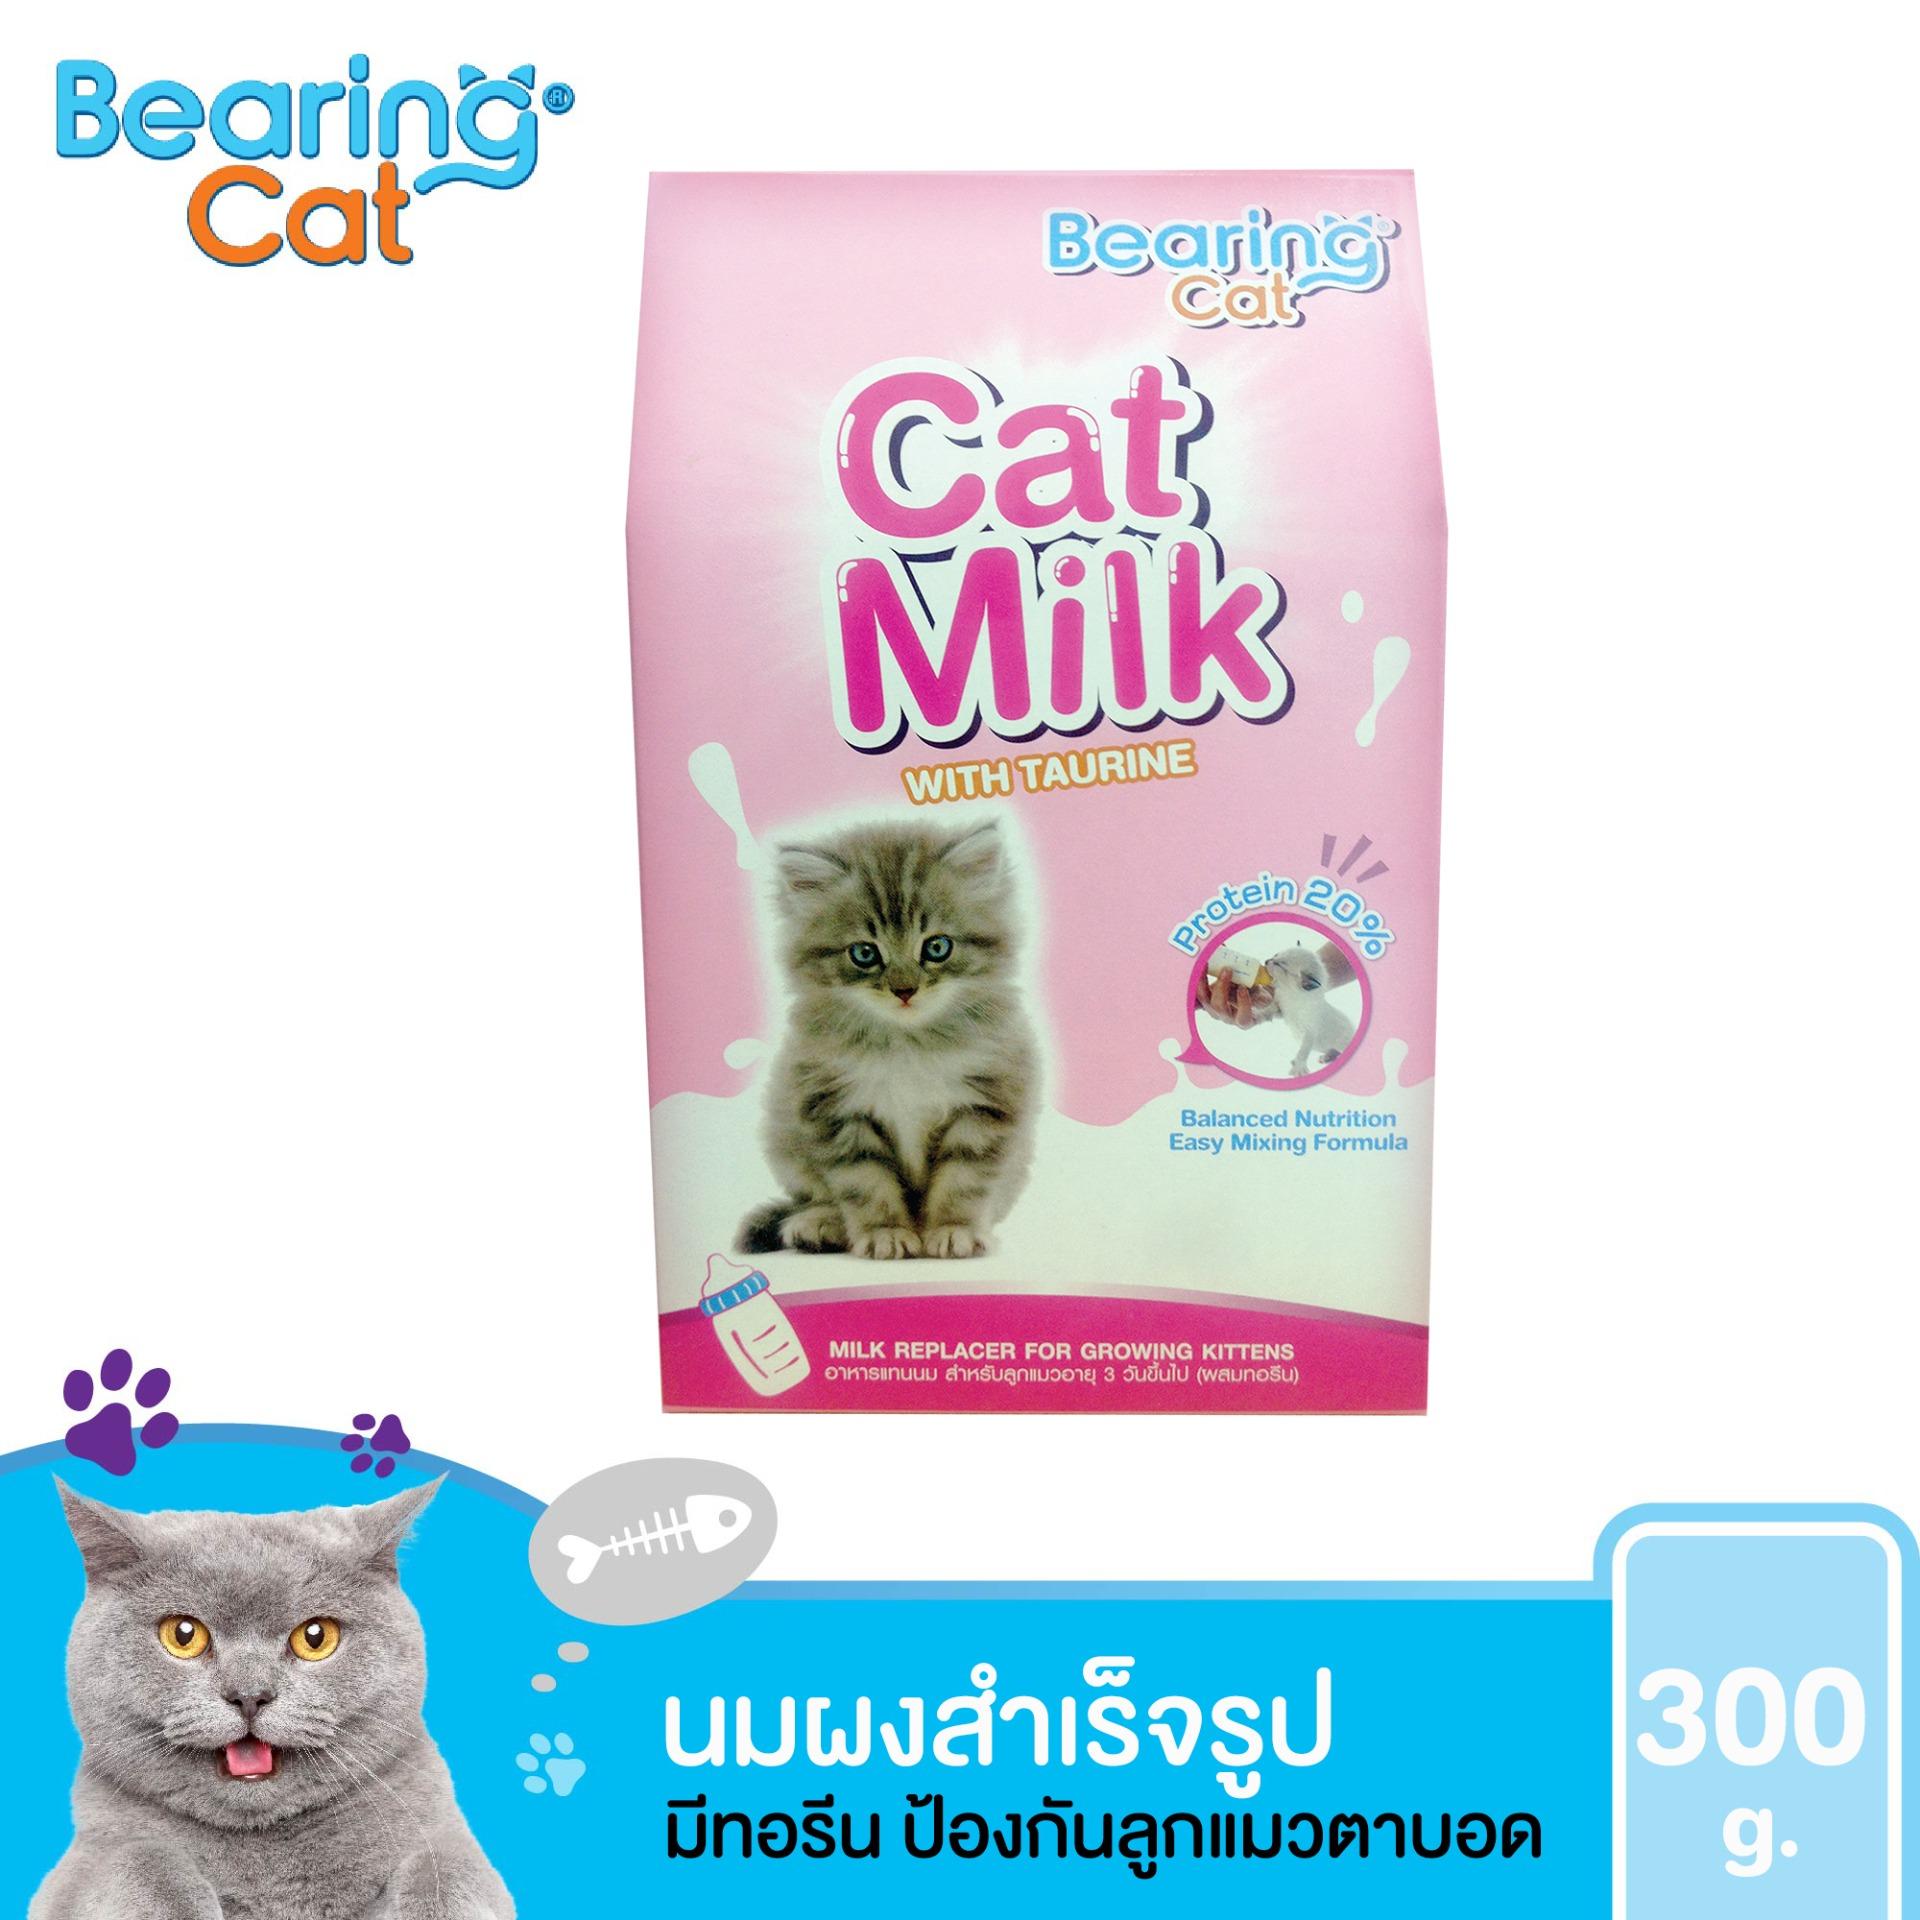 Bearing Cat Milk with Taurine นมผงสำเร็จรูปสำหรับลูกแมว ขนาด 300g.